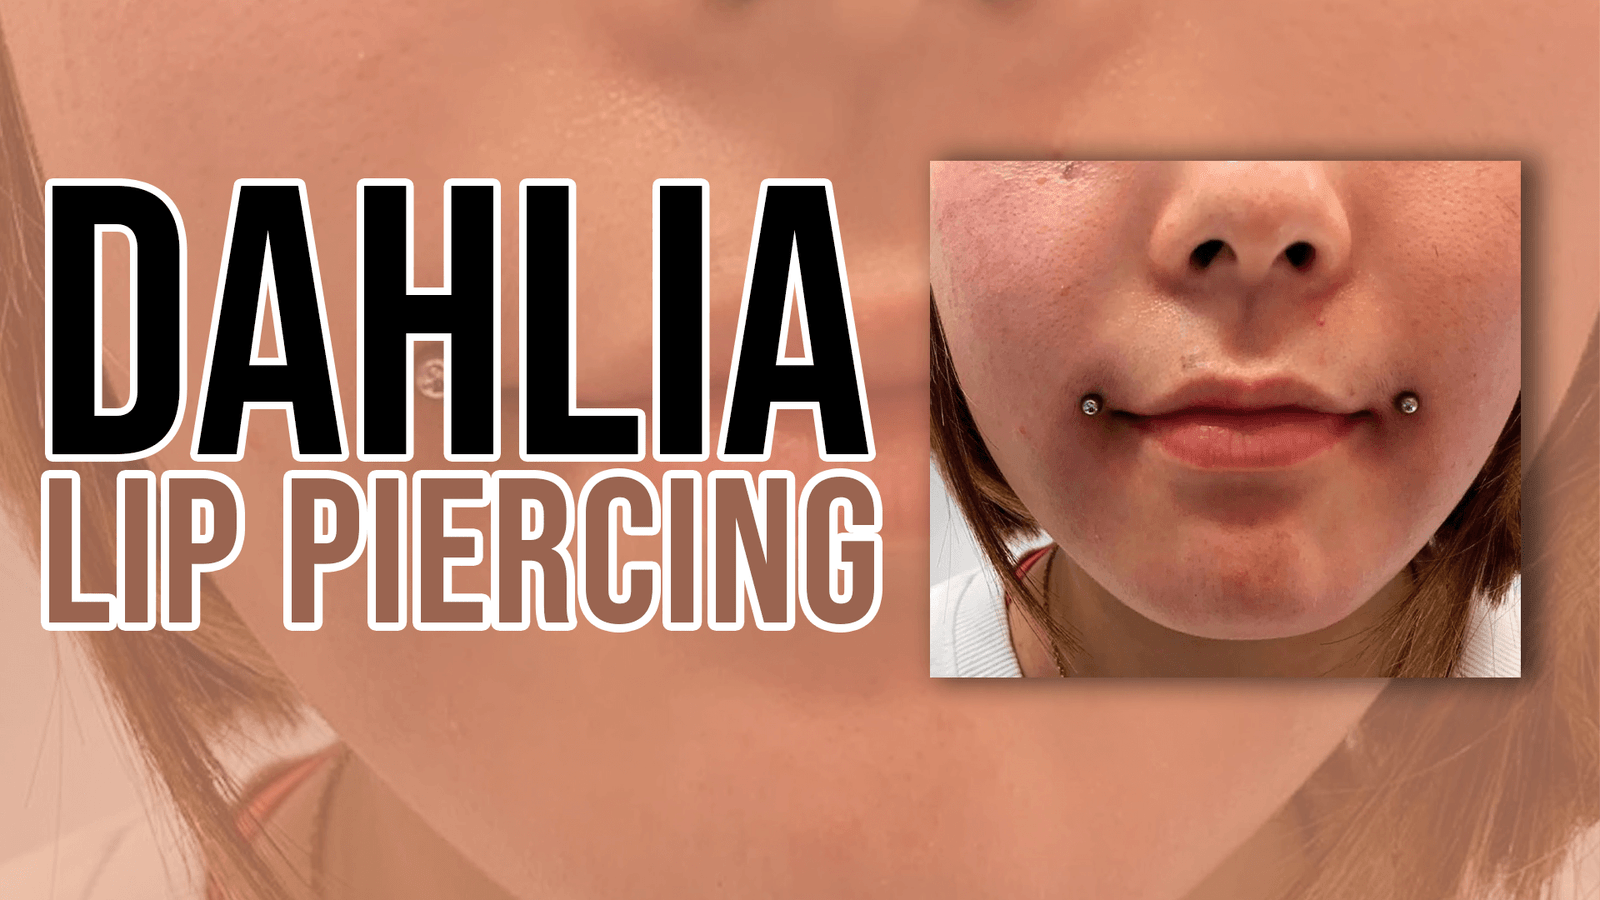 Dahlia Lip Piercing